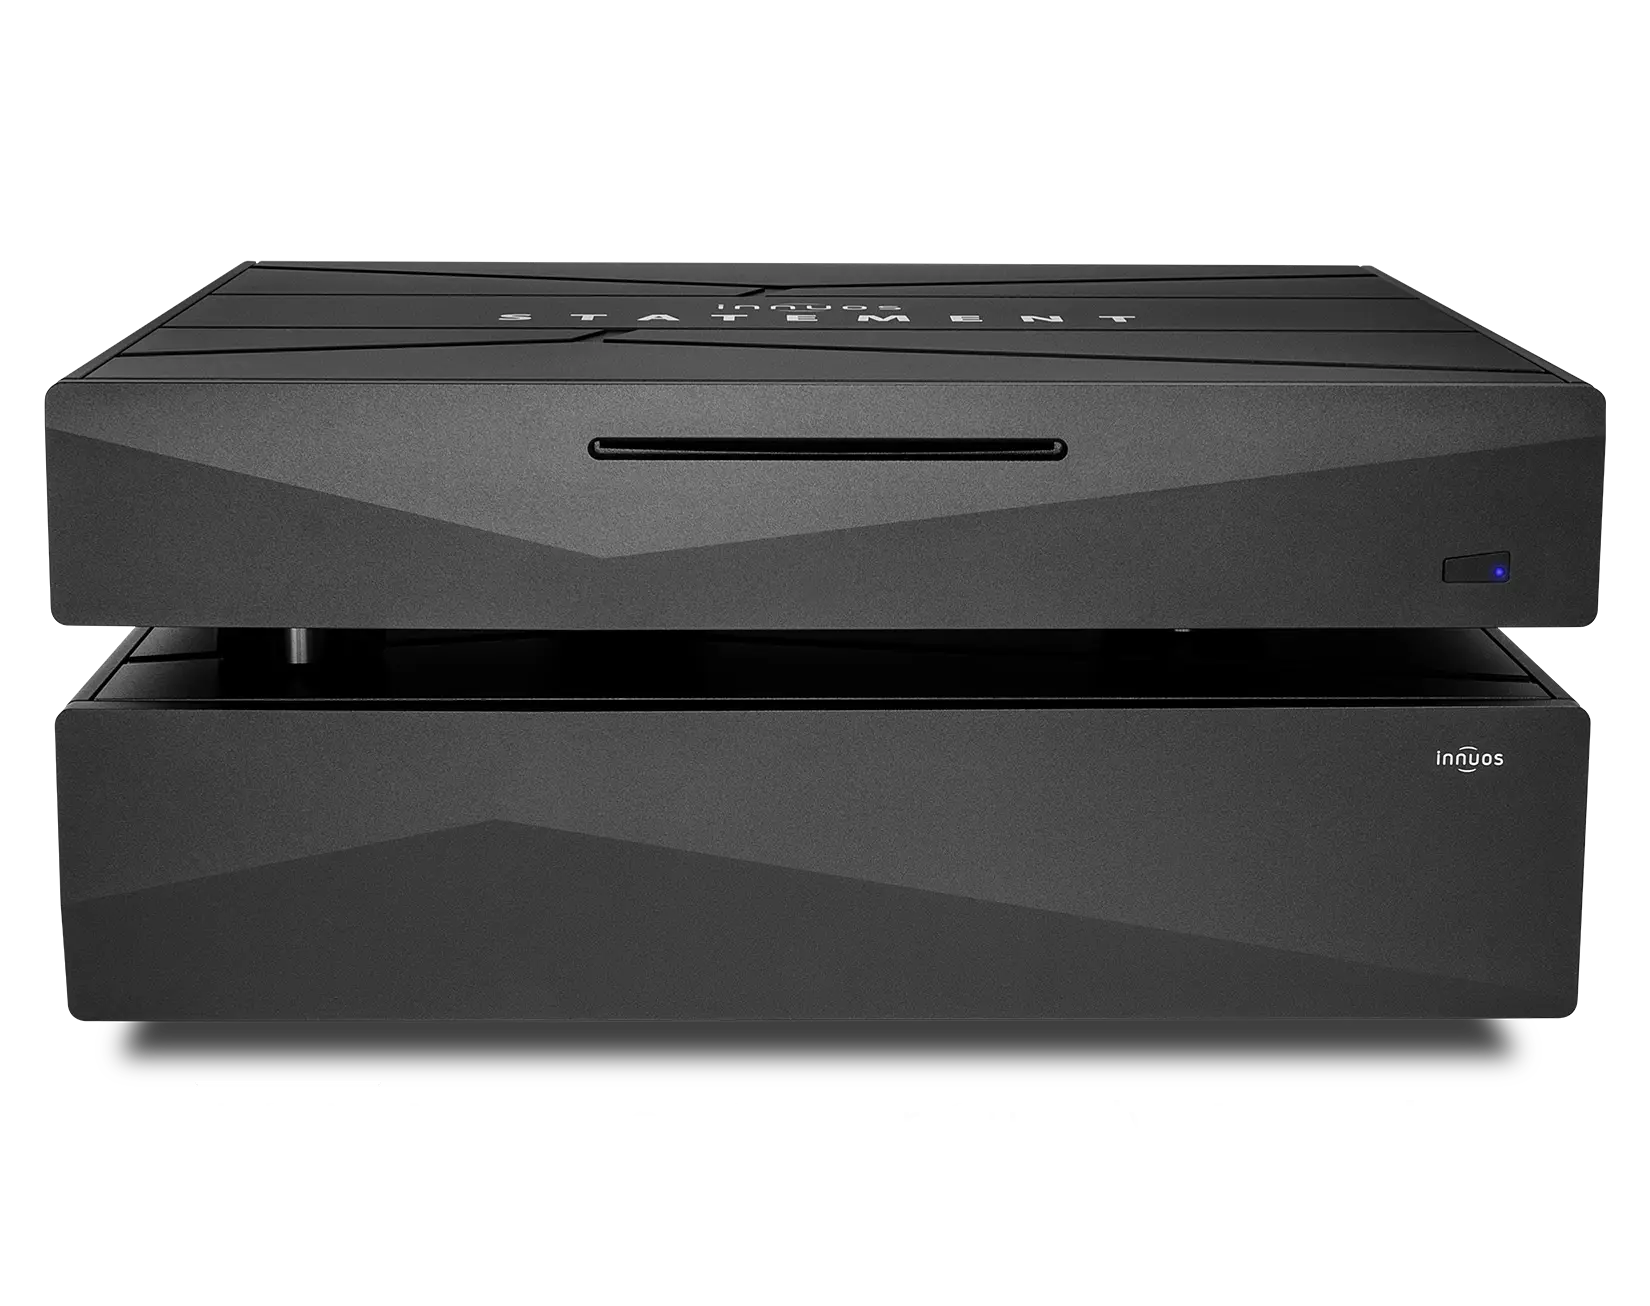 STATEMENT music server with Next-Generation Power Supply